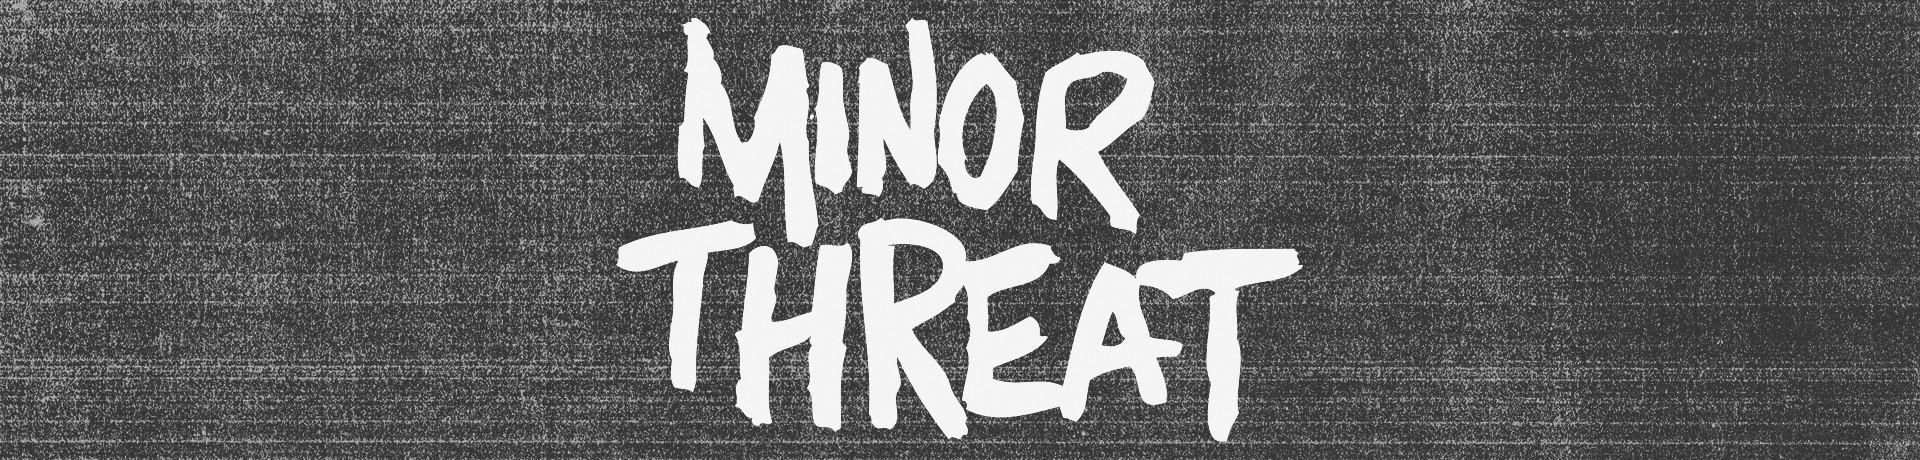 Minor Threat - Just A